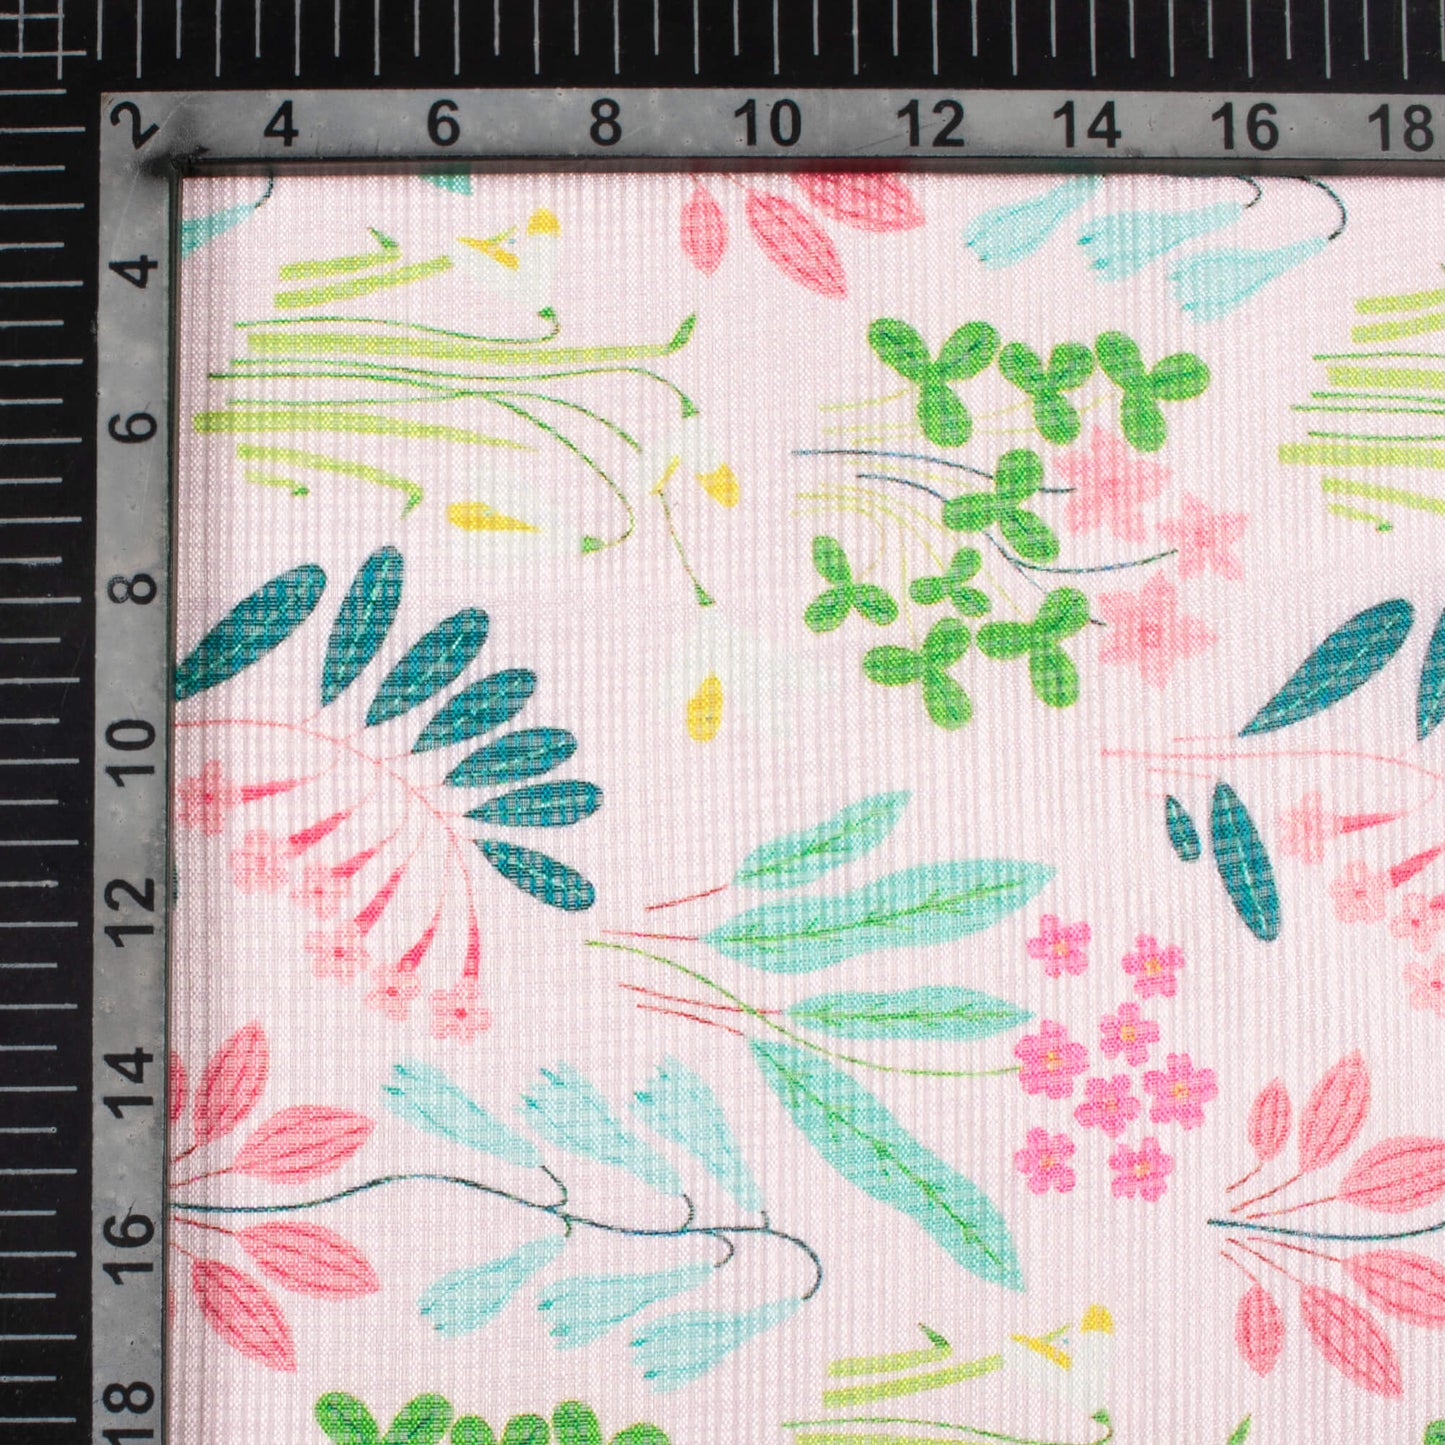 Pastel Pink And Green Leaf Pattern Digital Print Kota Doria Fabric